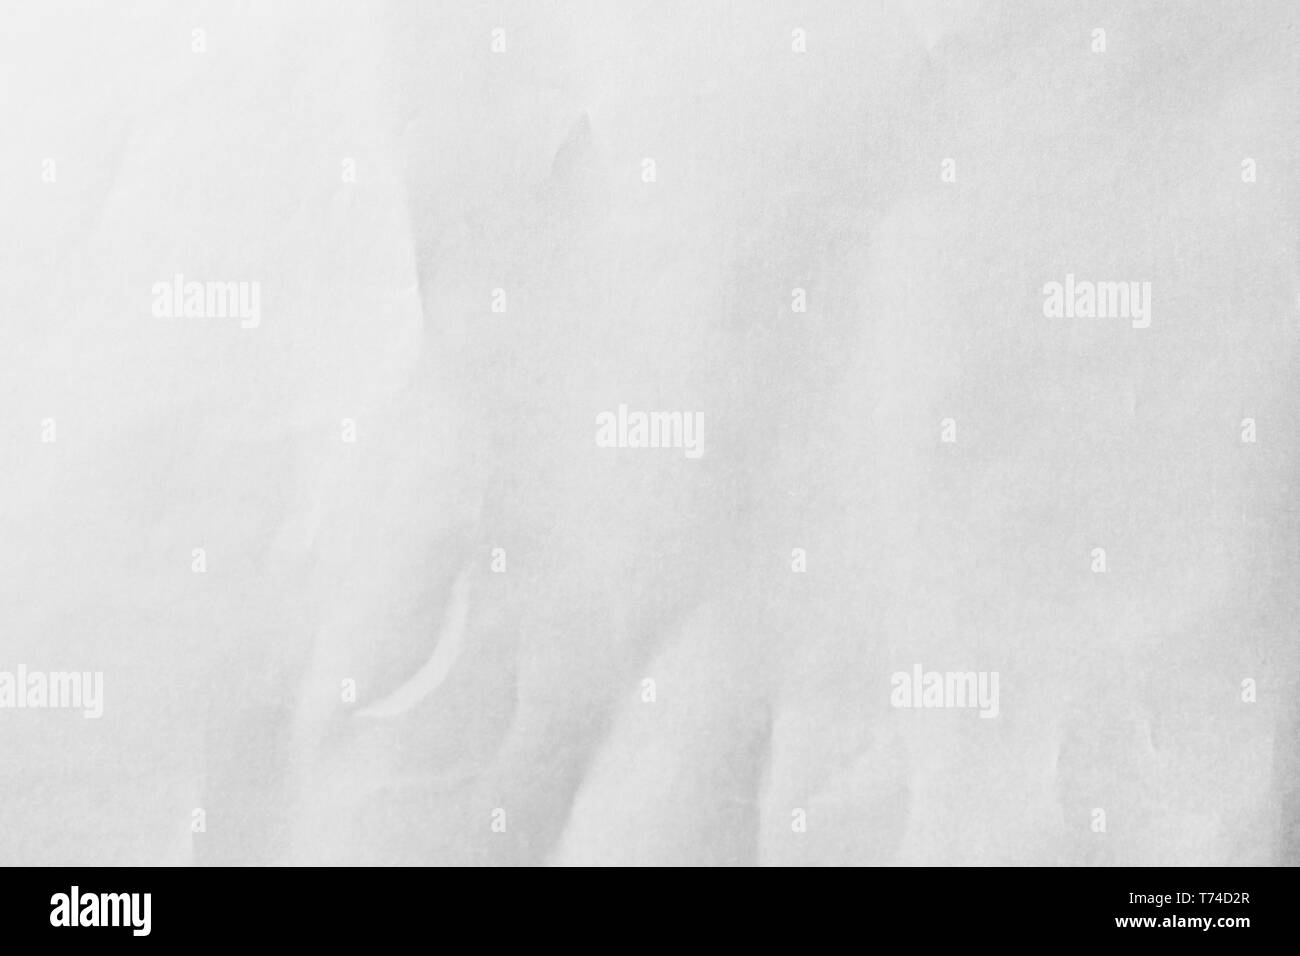 Light paper texture Stock Photo - Alamy